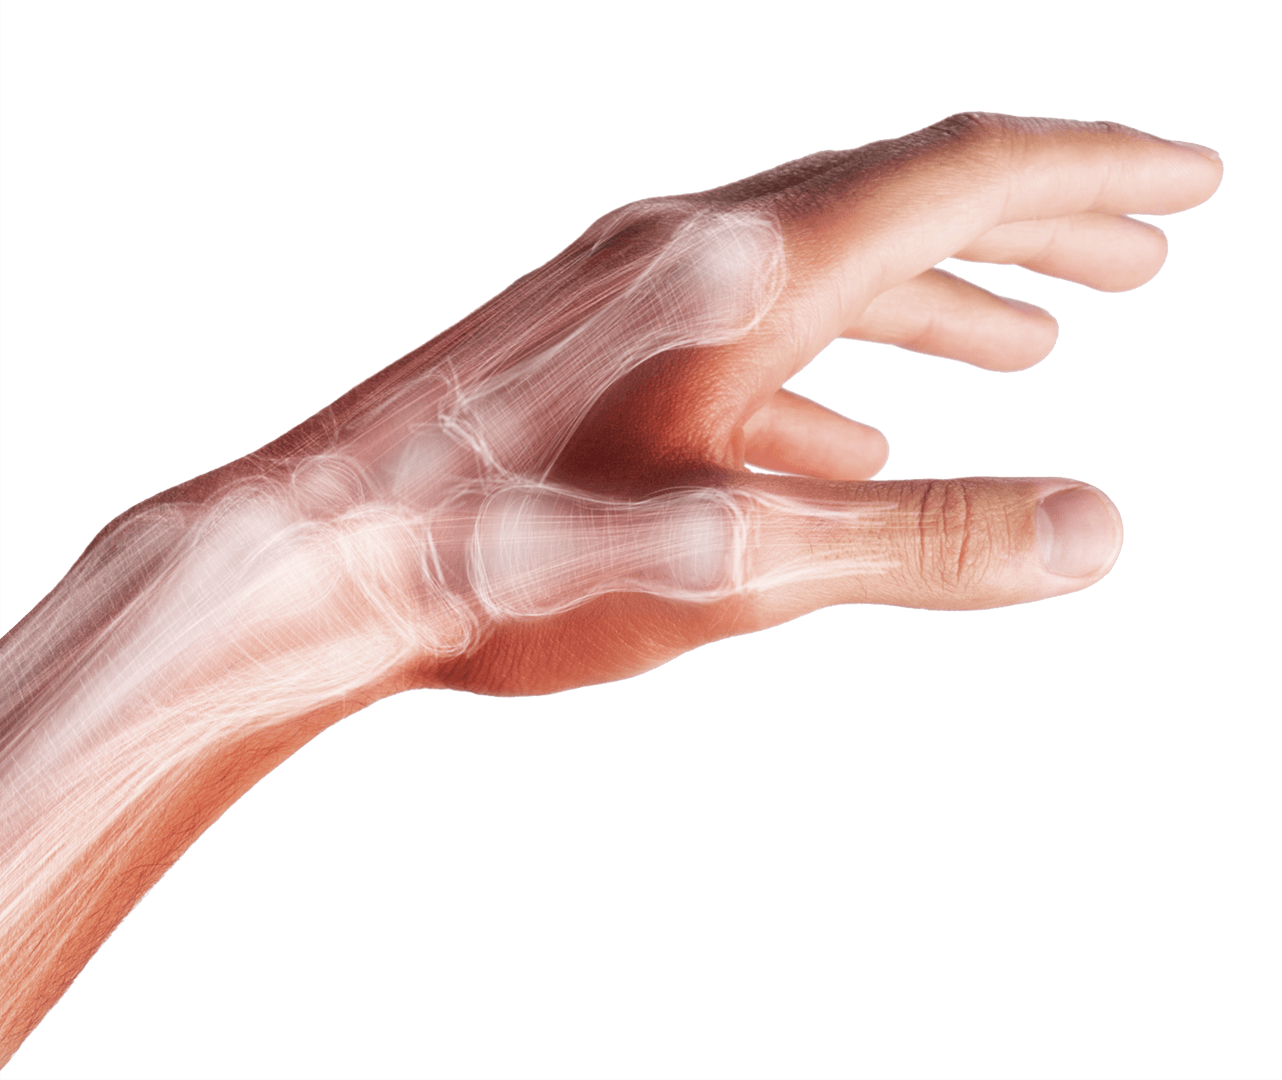 Blessures aux ligaments et tendons | Hand Surgeon Montreal